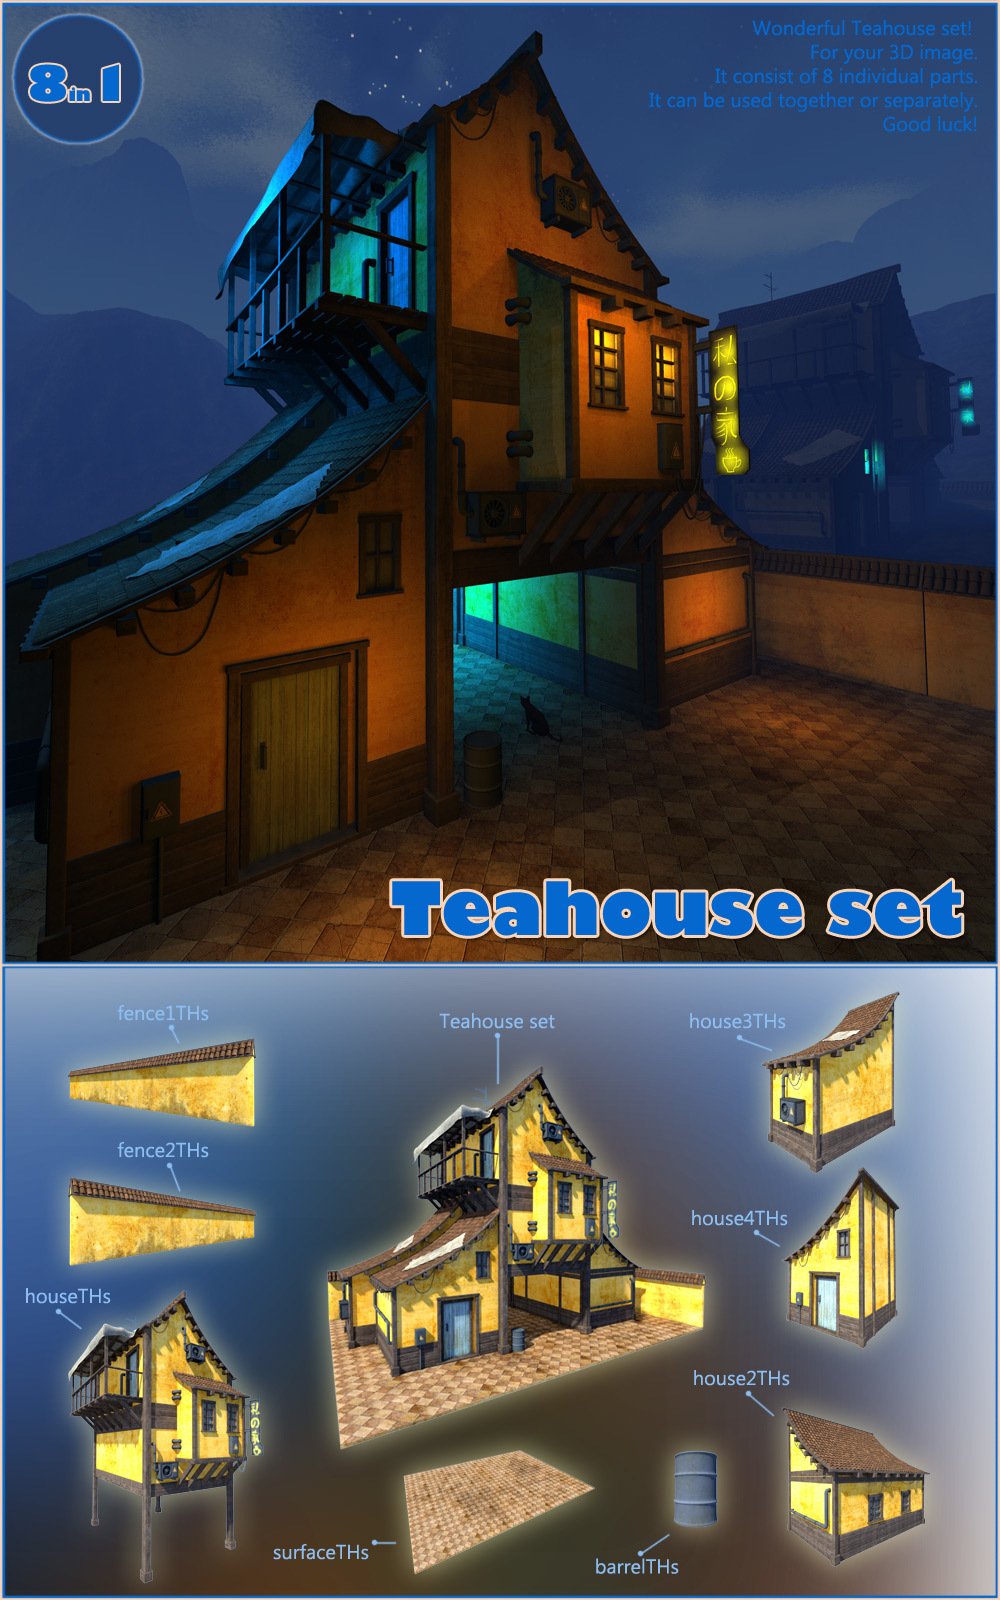 Teahouse set